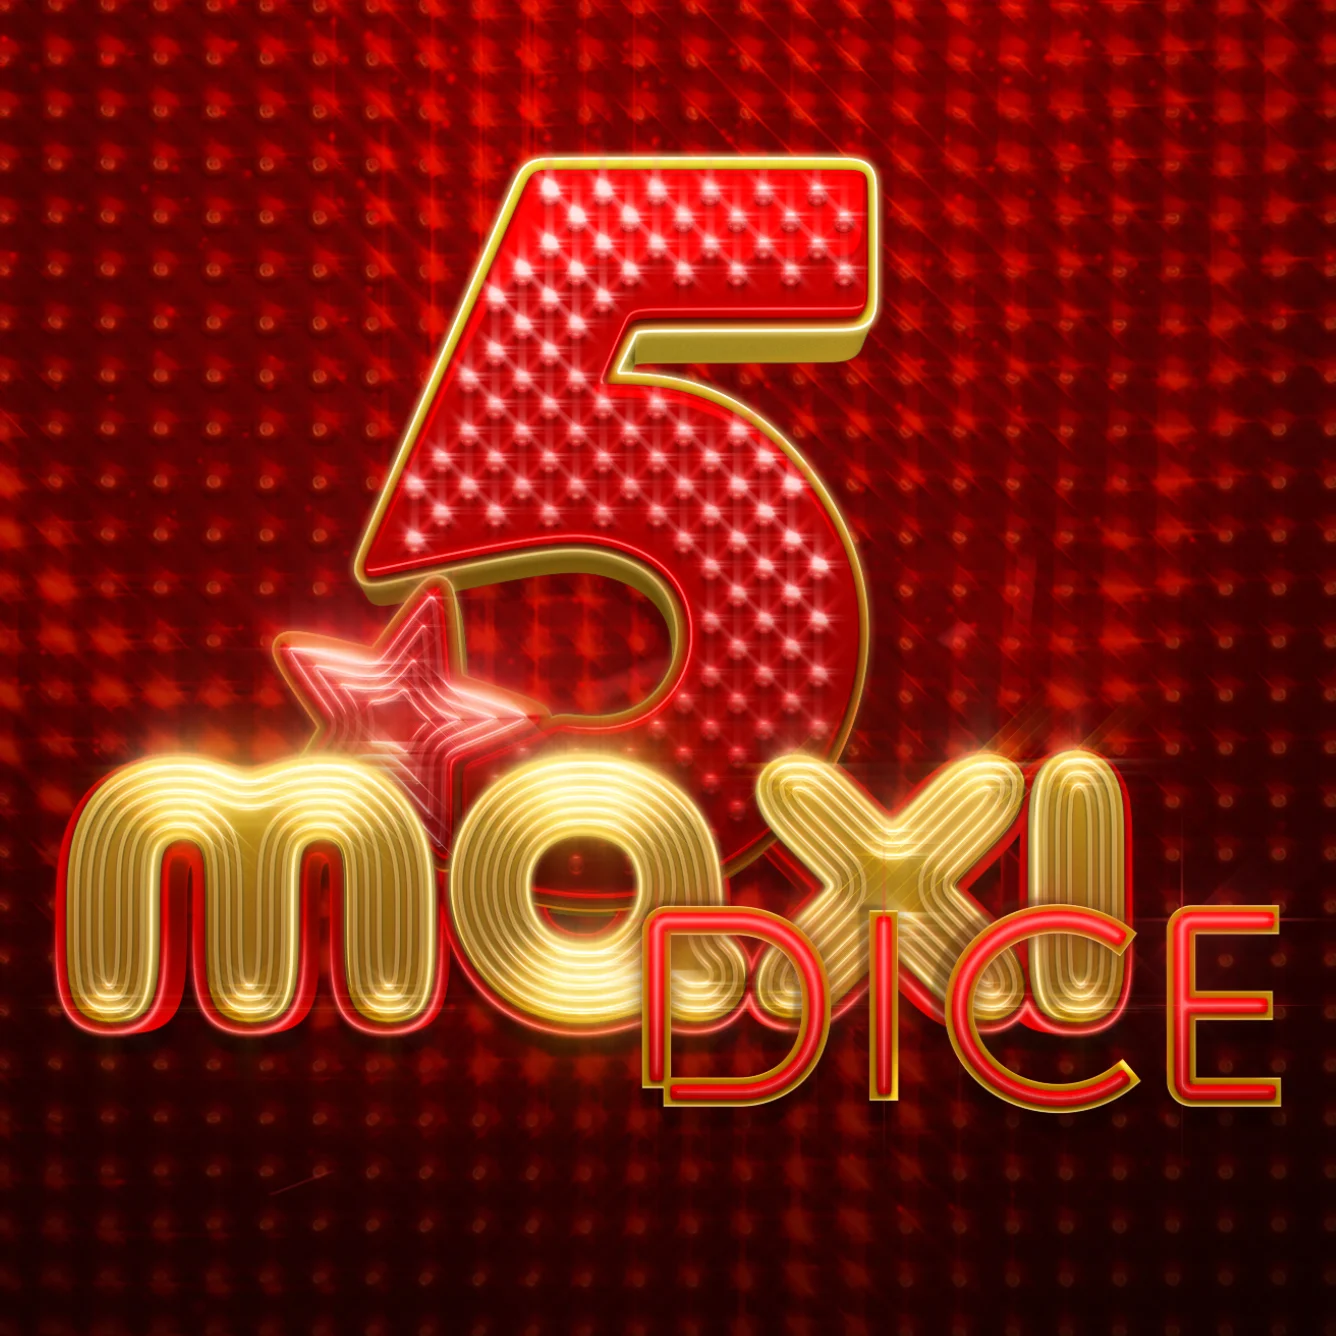 Play Maxi 5 Dice on Starcasinodice online casino